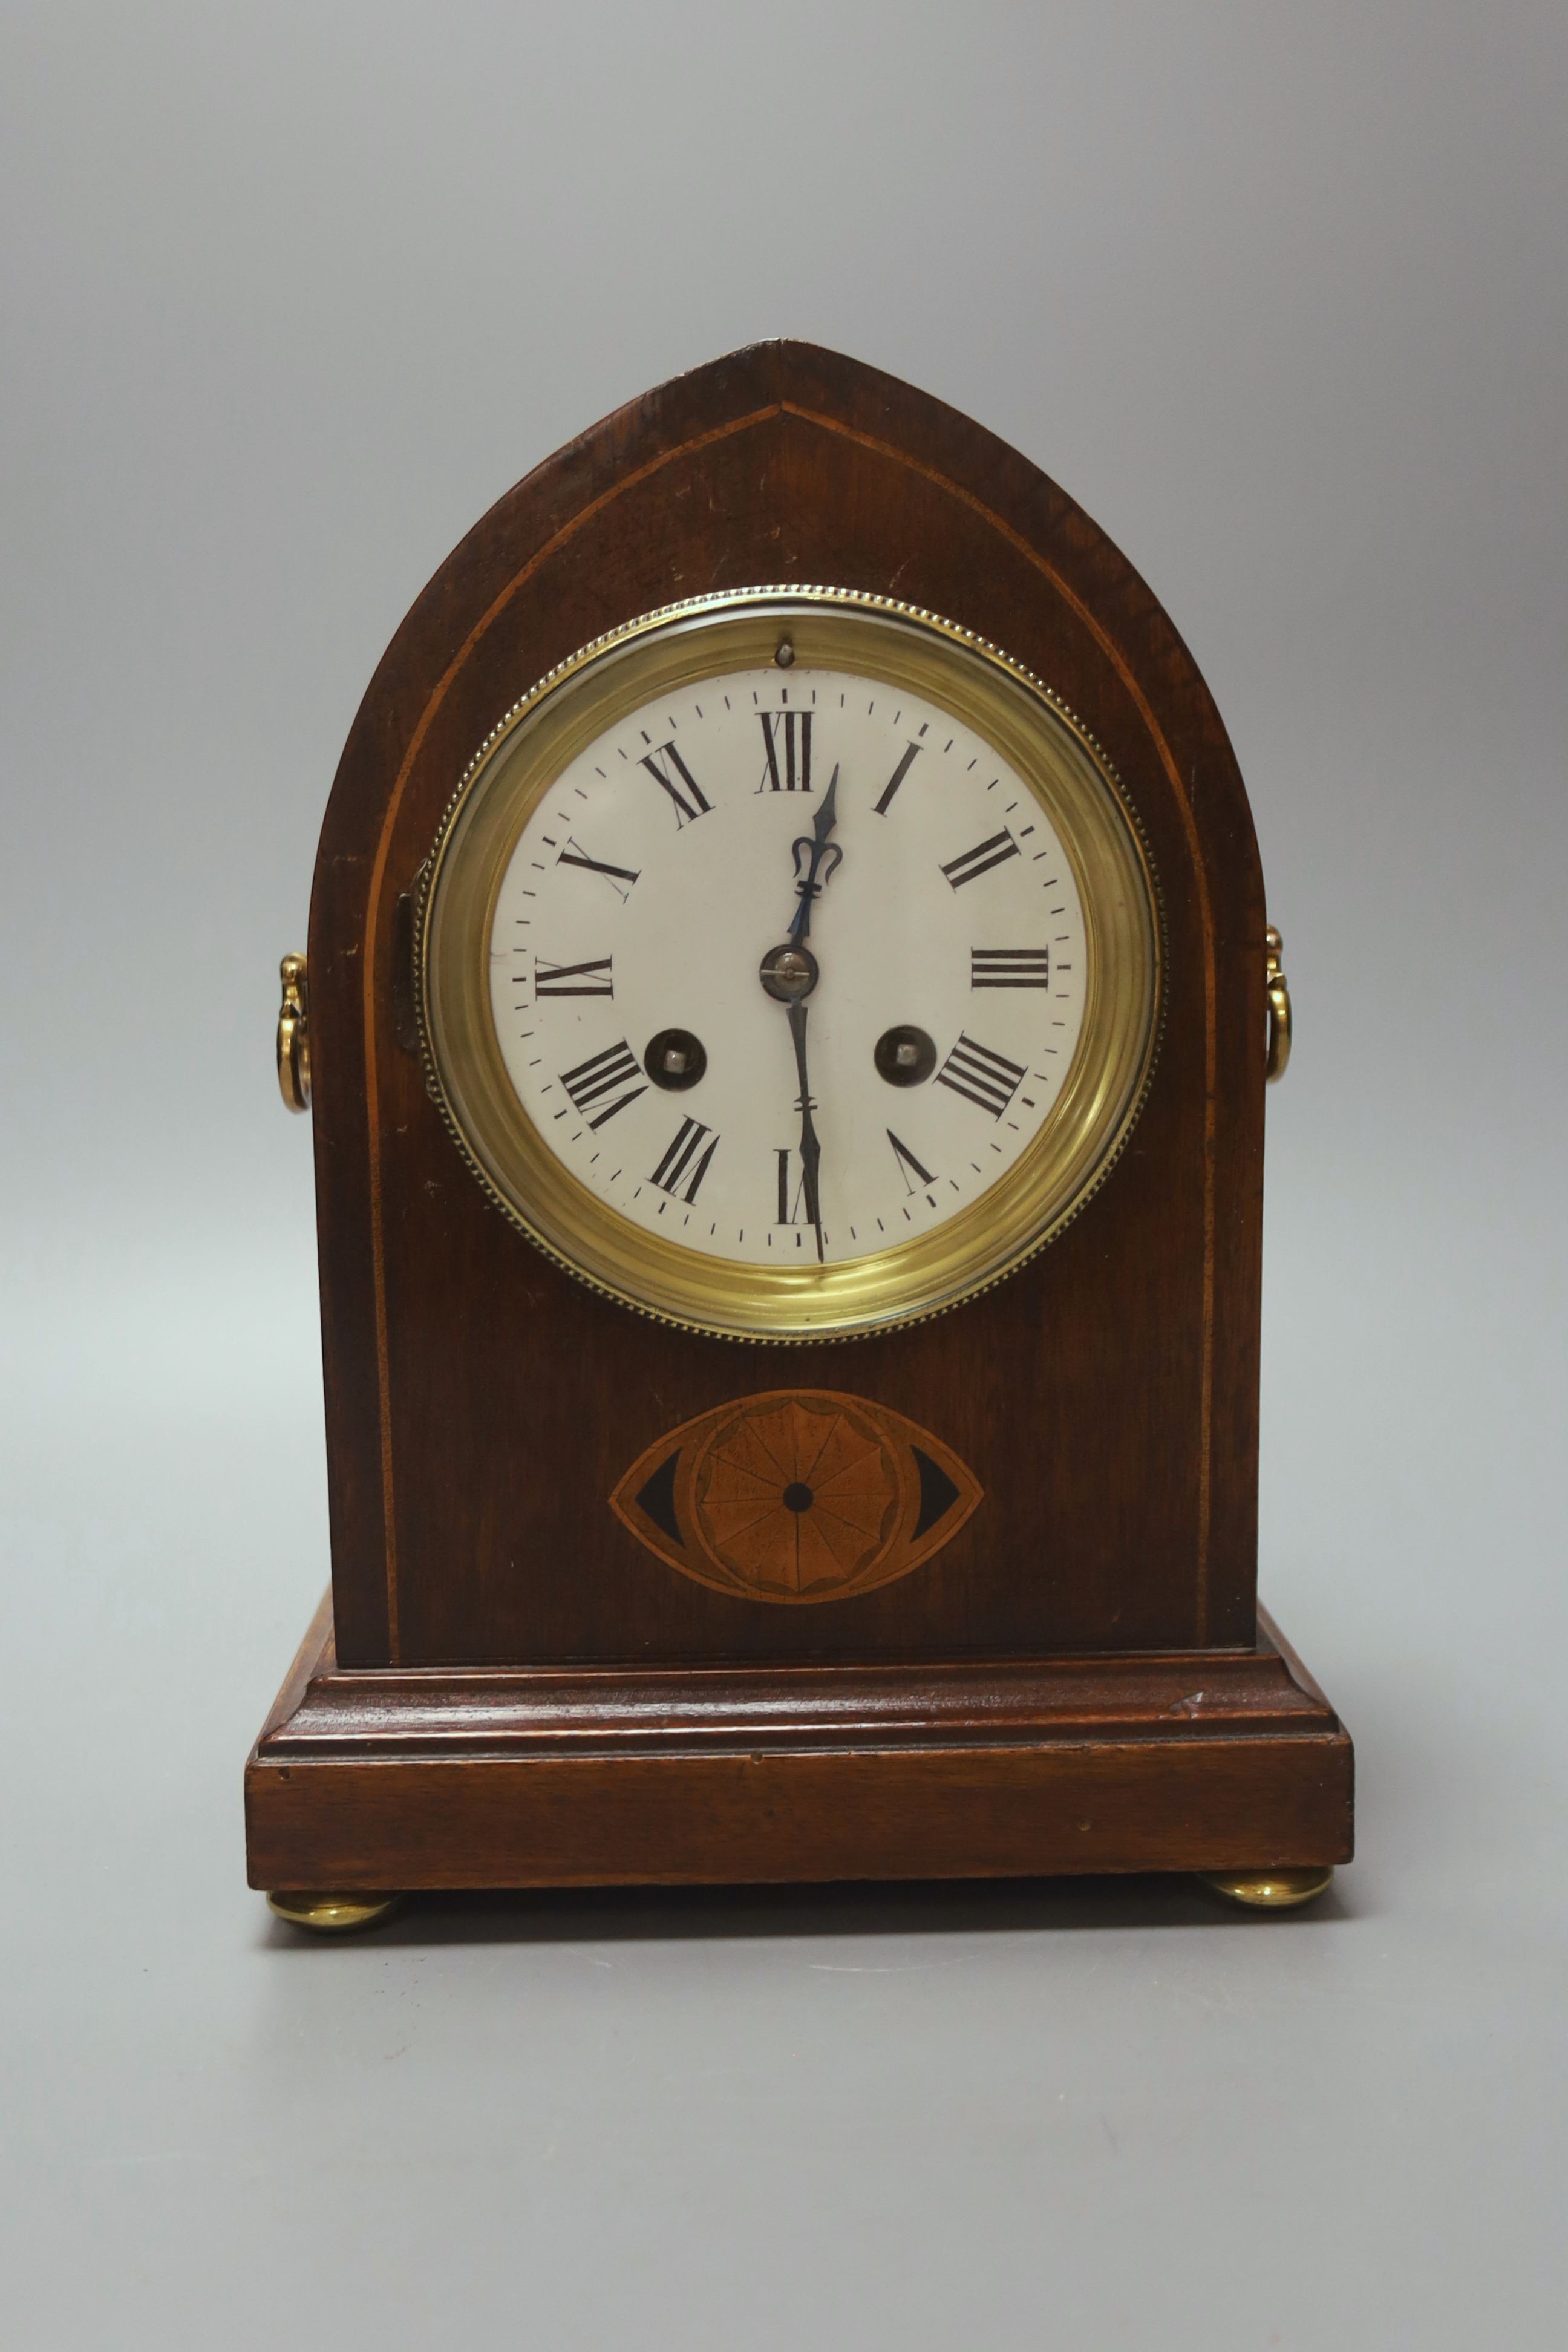 A mahogany and marquetry mantel clock, 26cm high (af) pendulum, no key